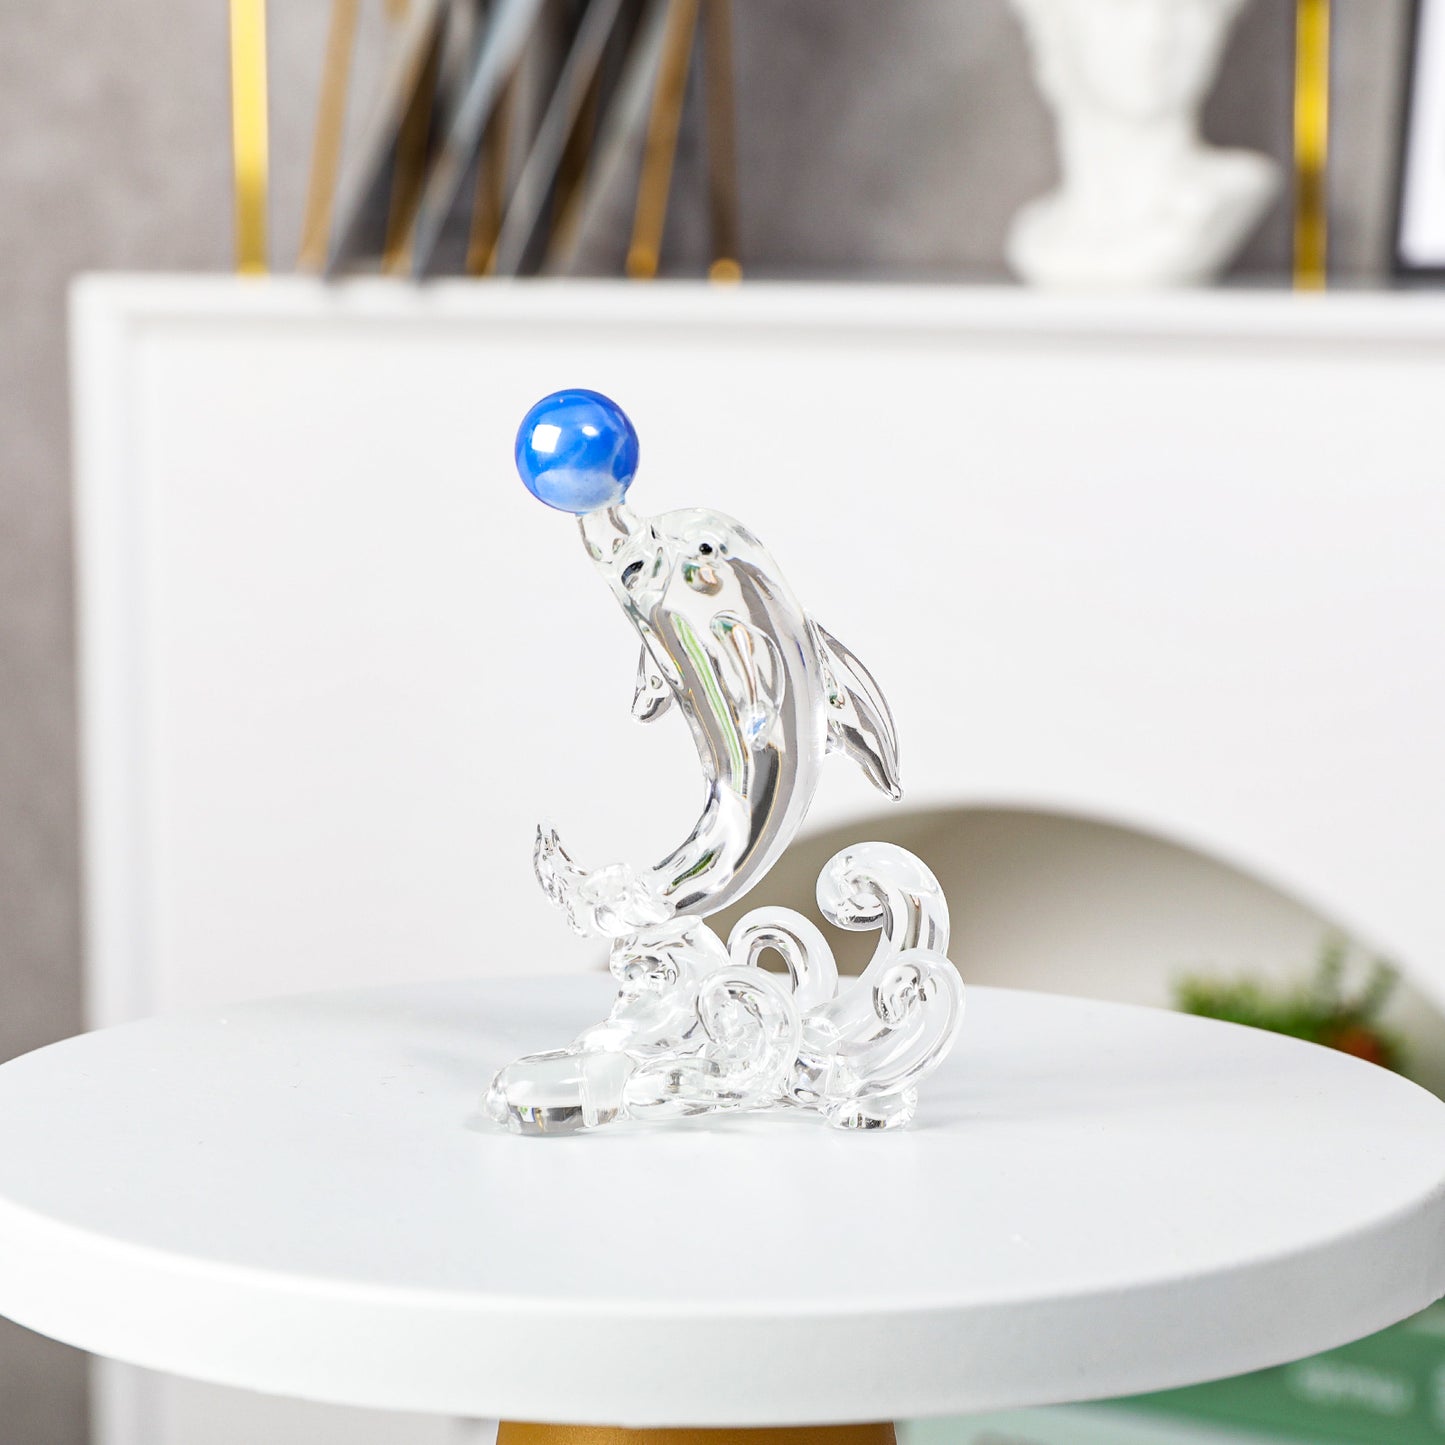 Crystal Dolphin Figurine (Style 1)